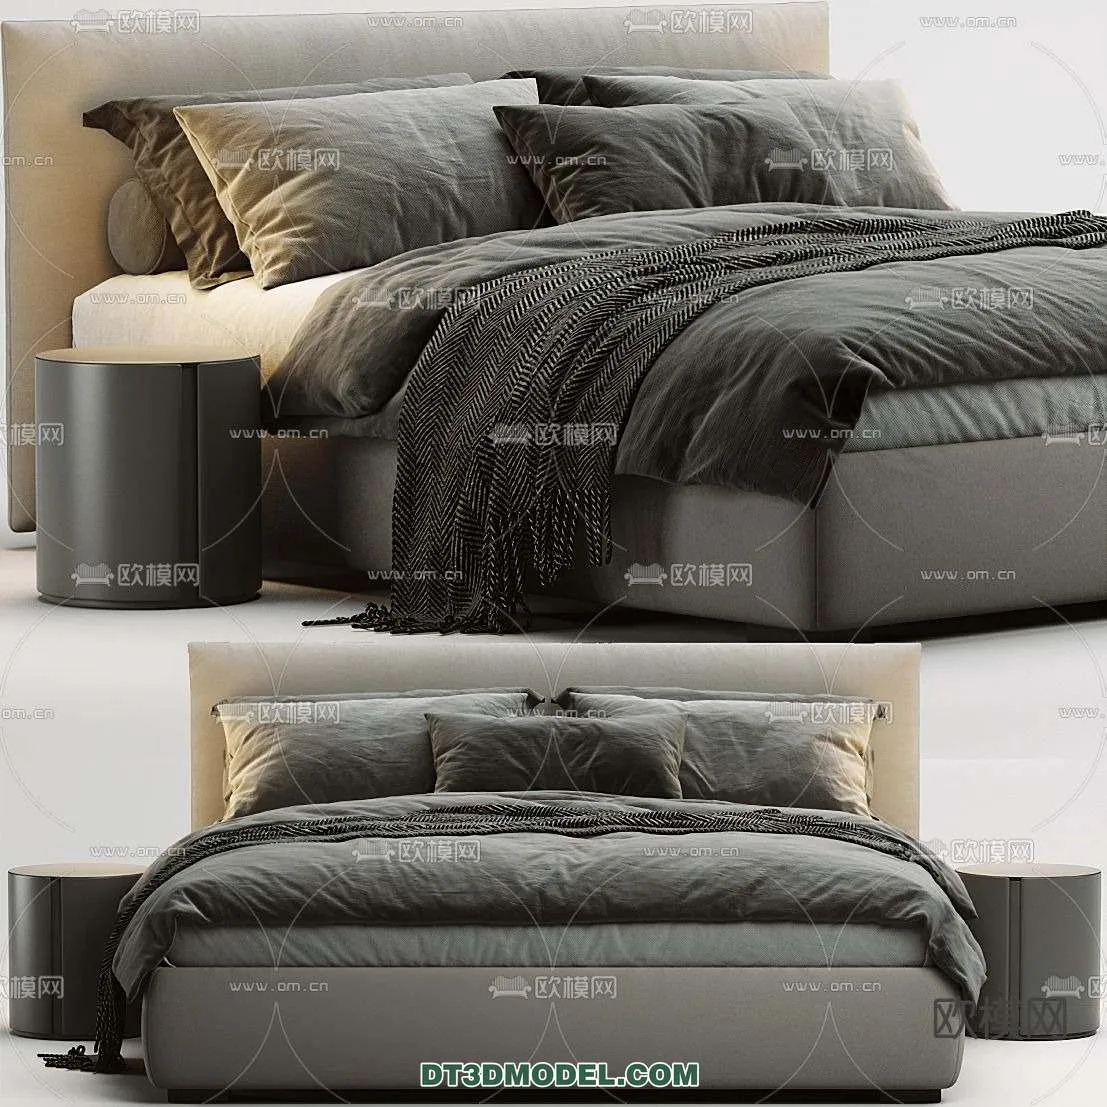 Double Bed 3D Models – 0029